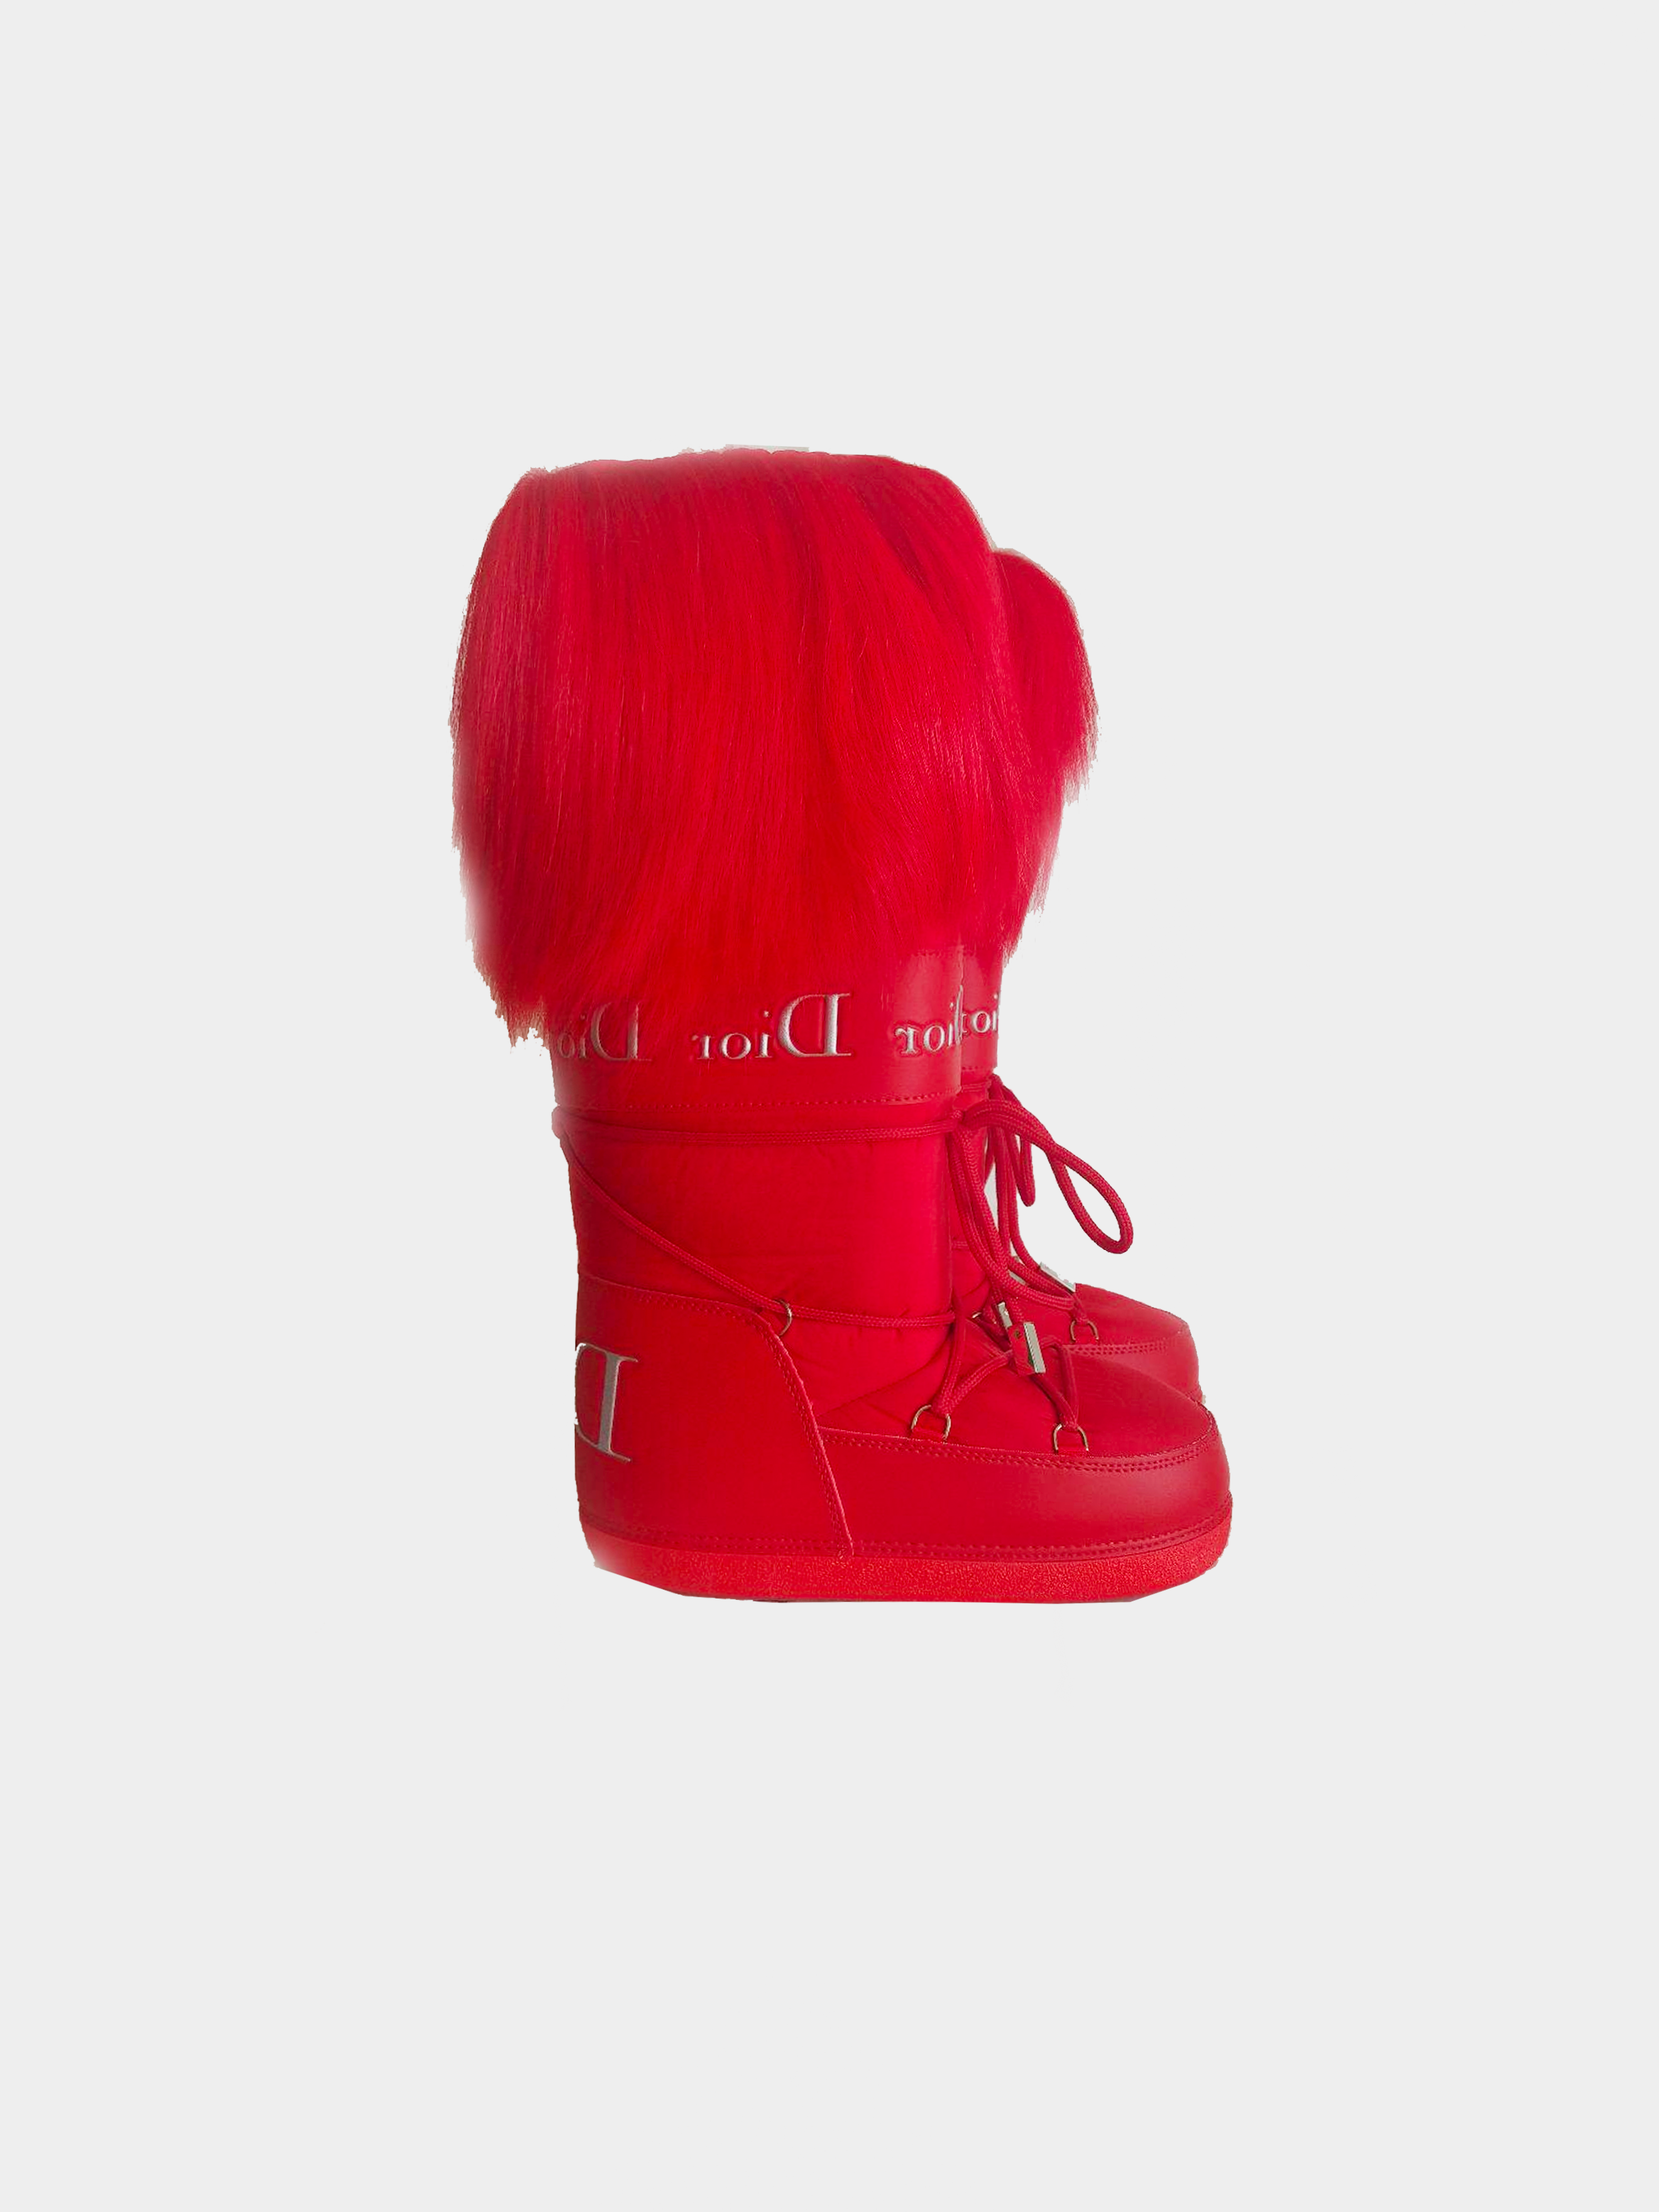 Korrupt tag på sightseeing bjærgning Christian Dior Red 2000s Rare Fur Moon Boots · INTO